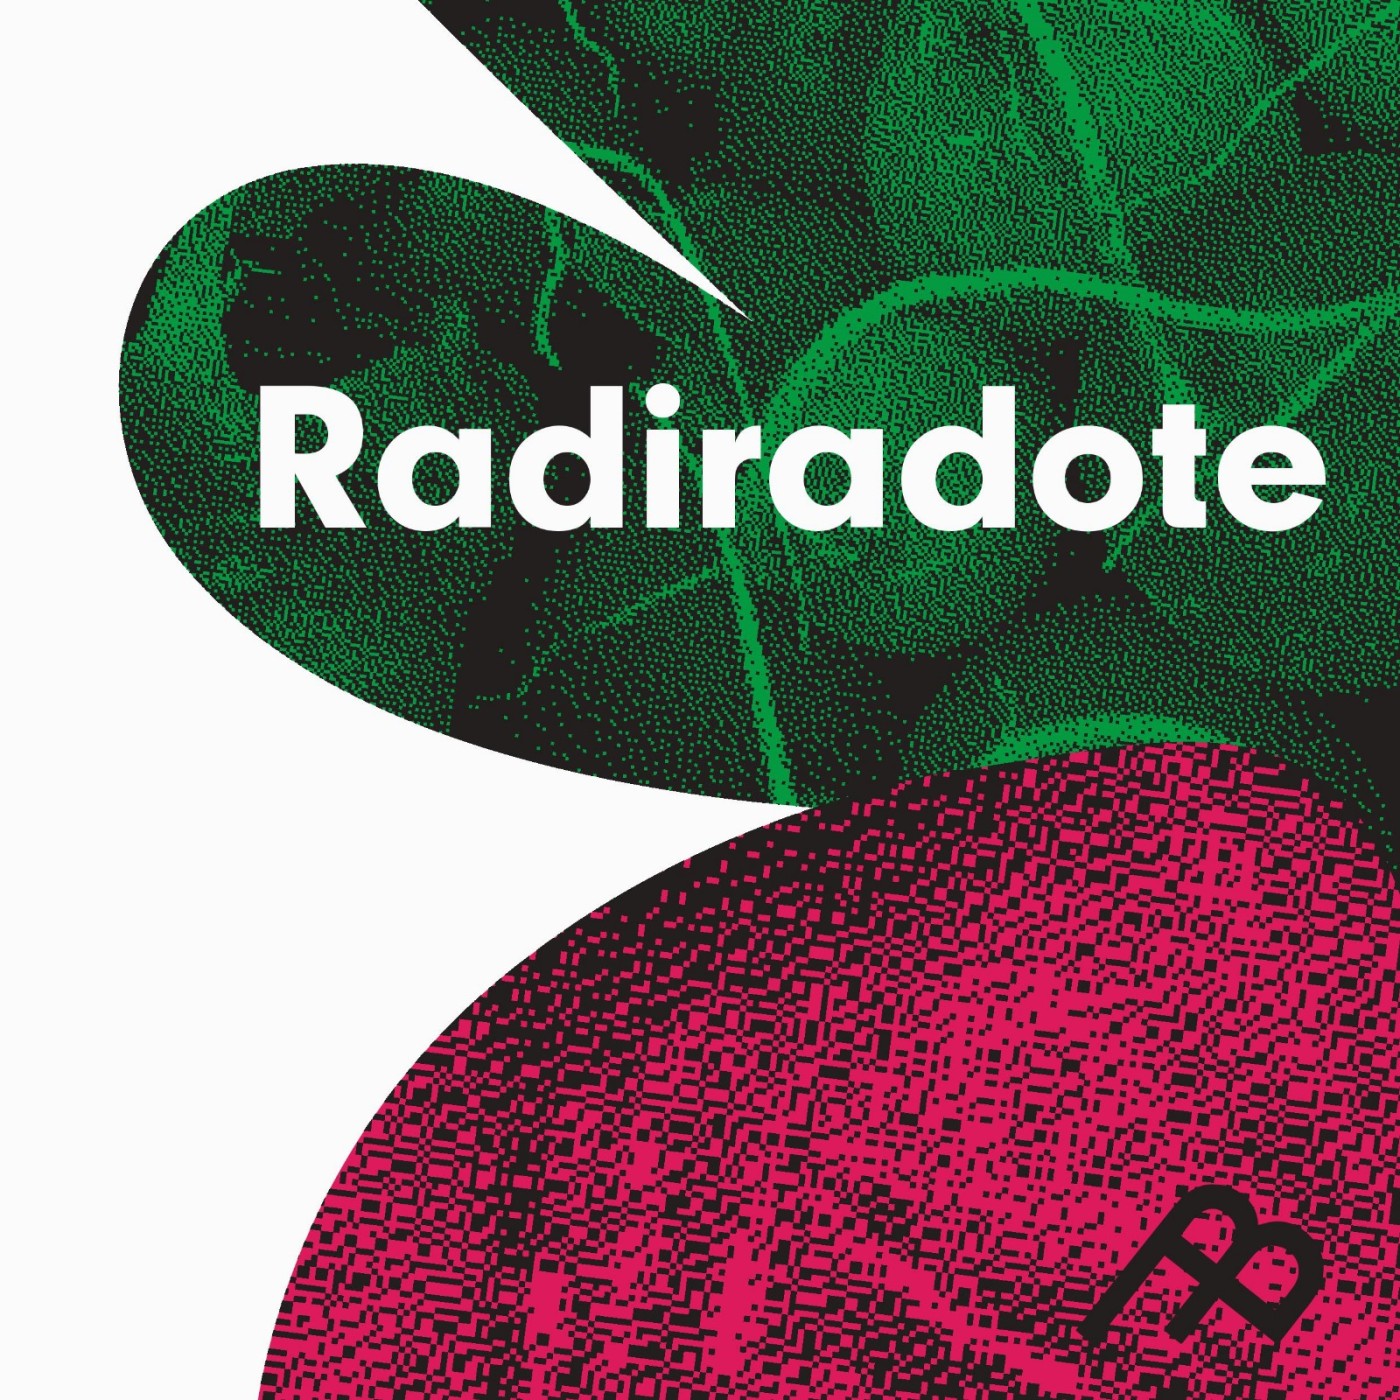 RadiRadote - Emission 3 Part.1